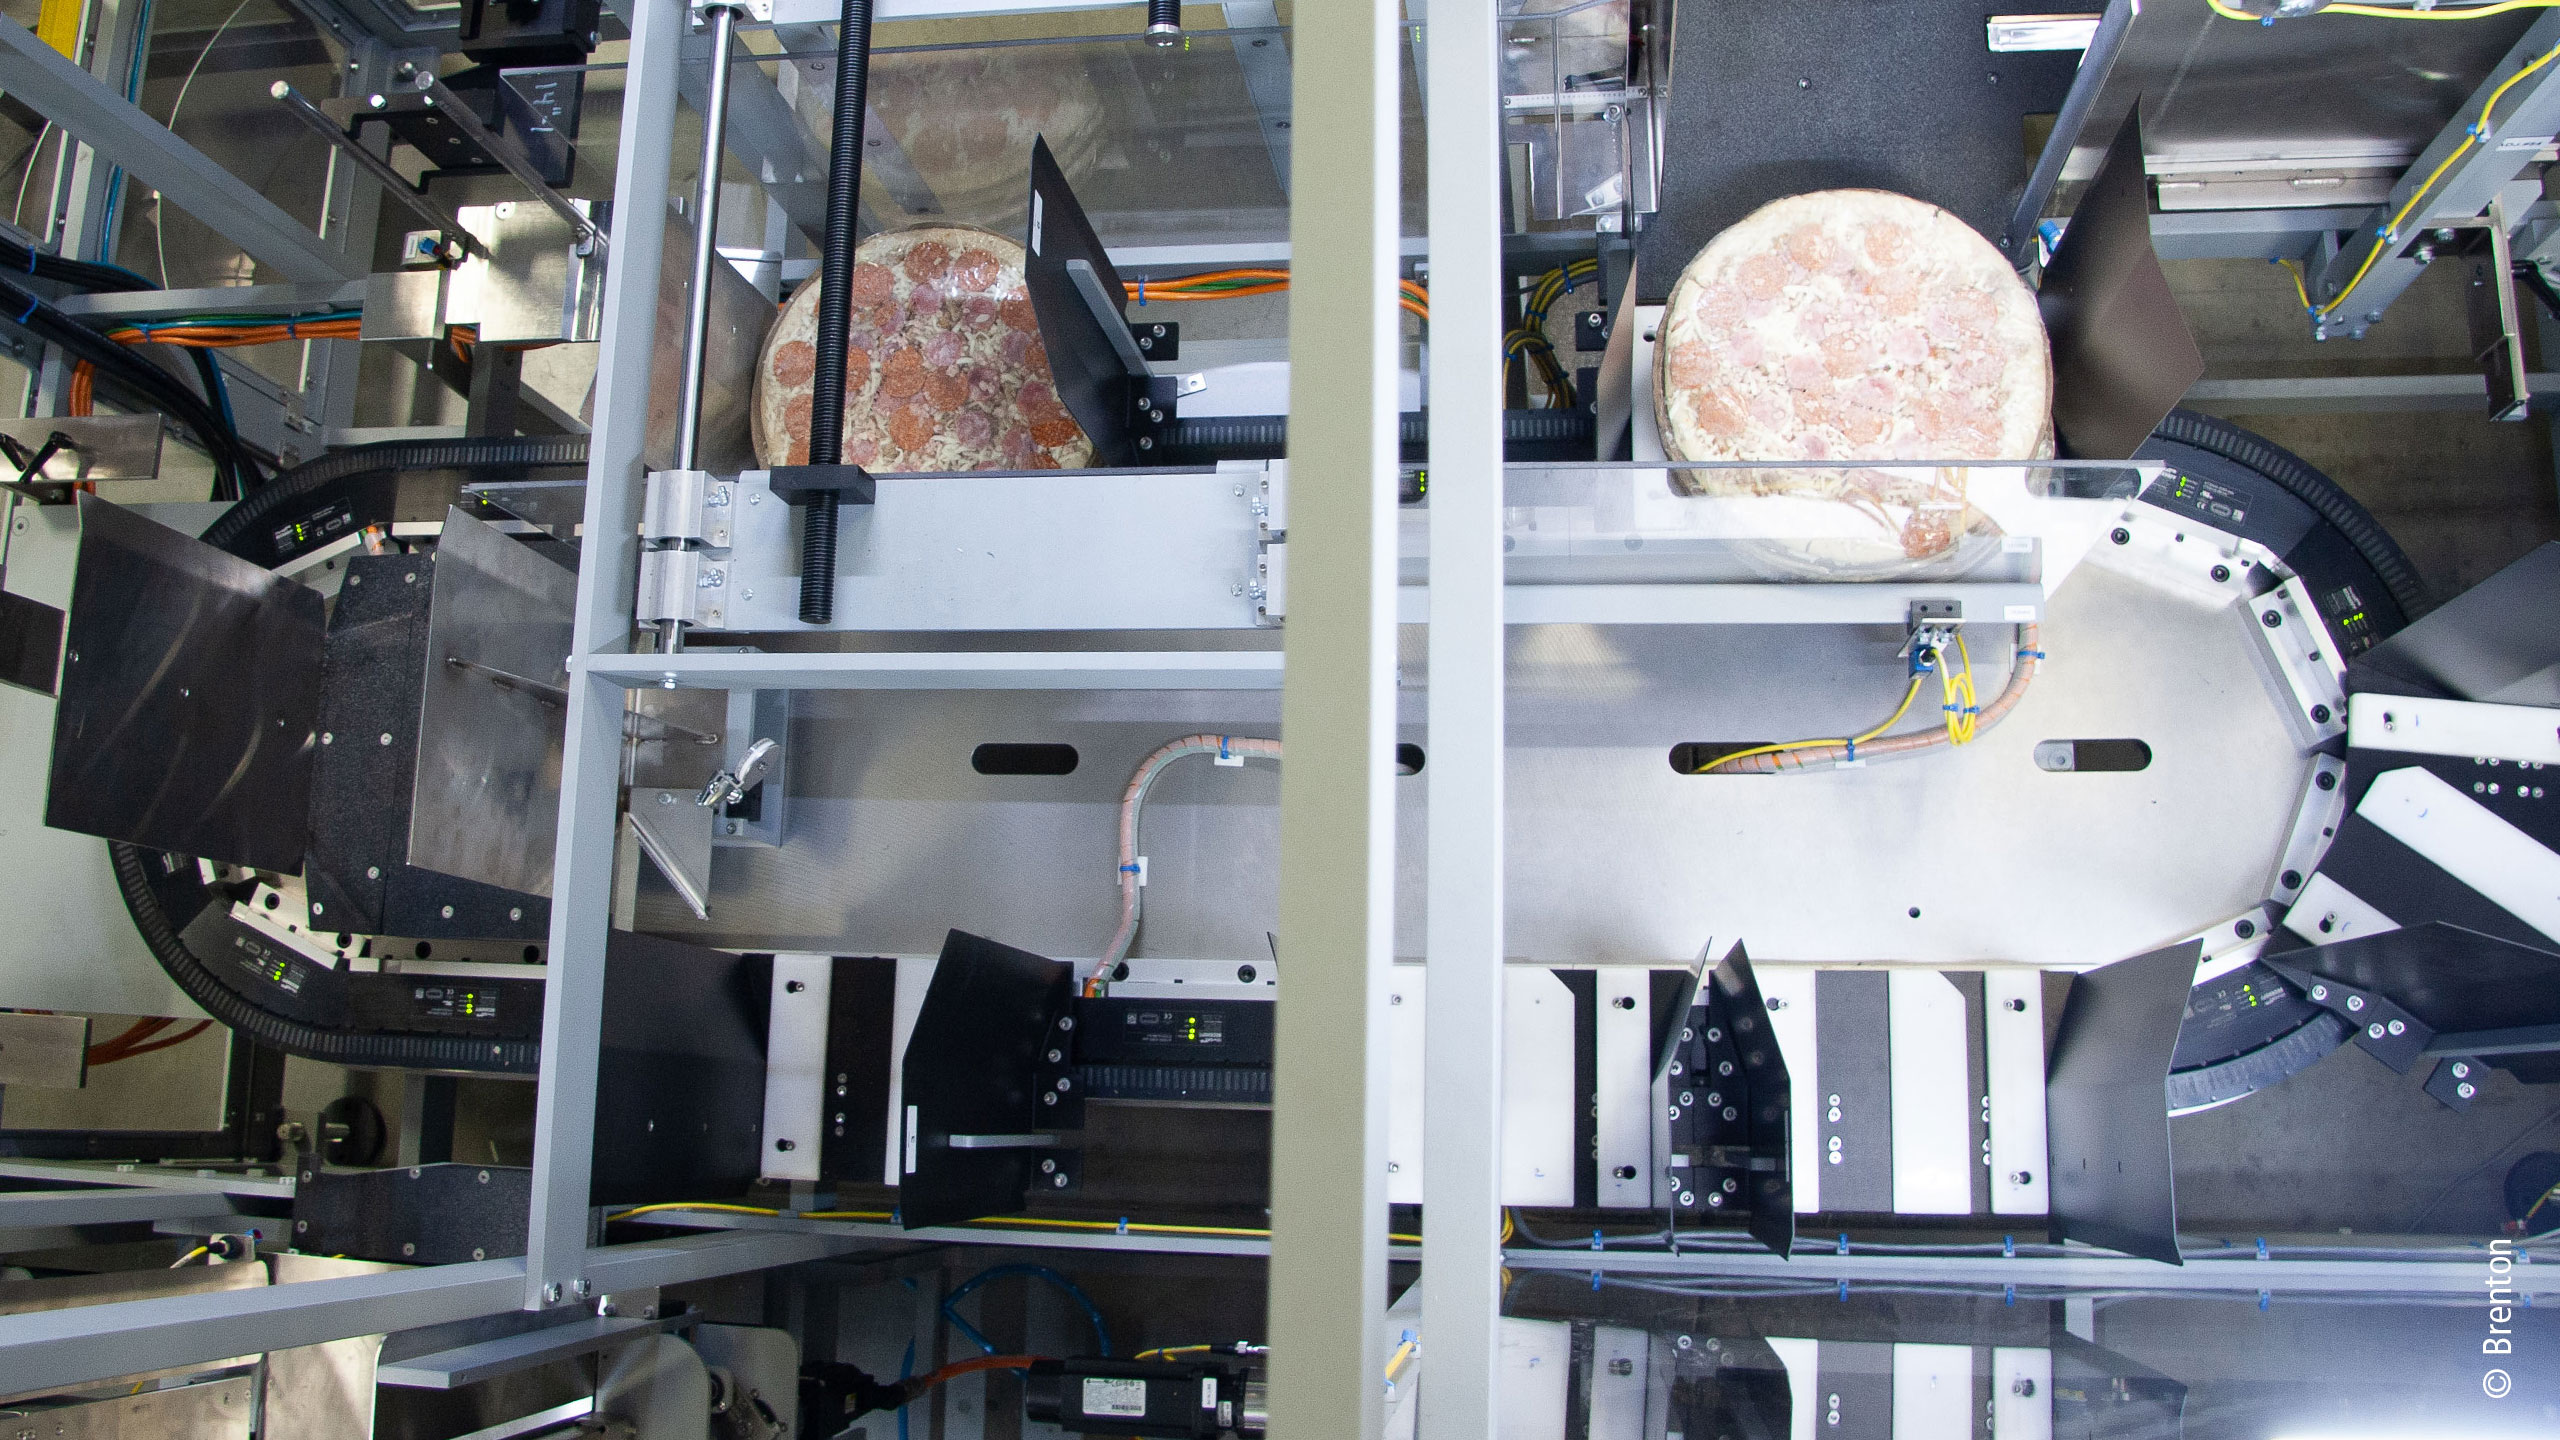 XTS 磁驱柔性输送系统是 Brenton 公司 M2000 包装机的核心，如上图：XTS 系统带着一串装有披萨的桶状物绕过 180 度的转角，抓紧并稳定披萨堆 